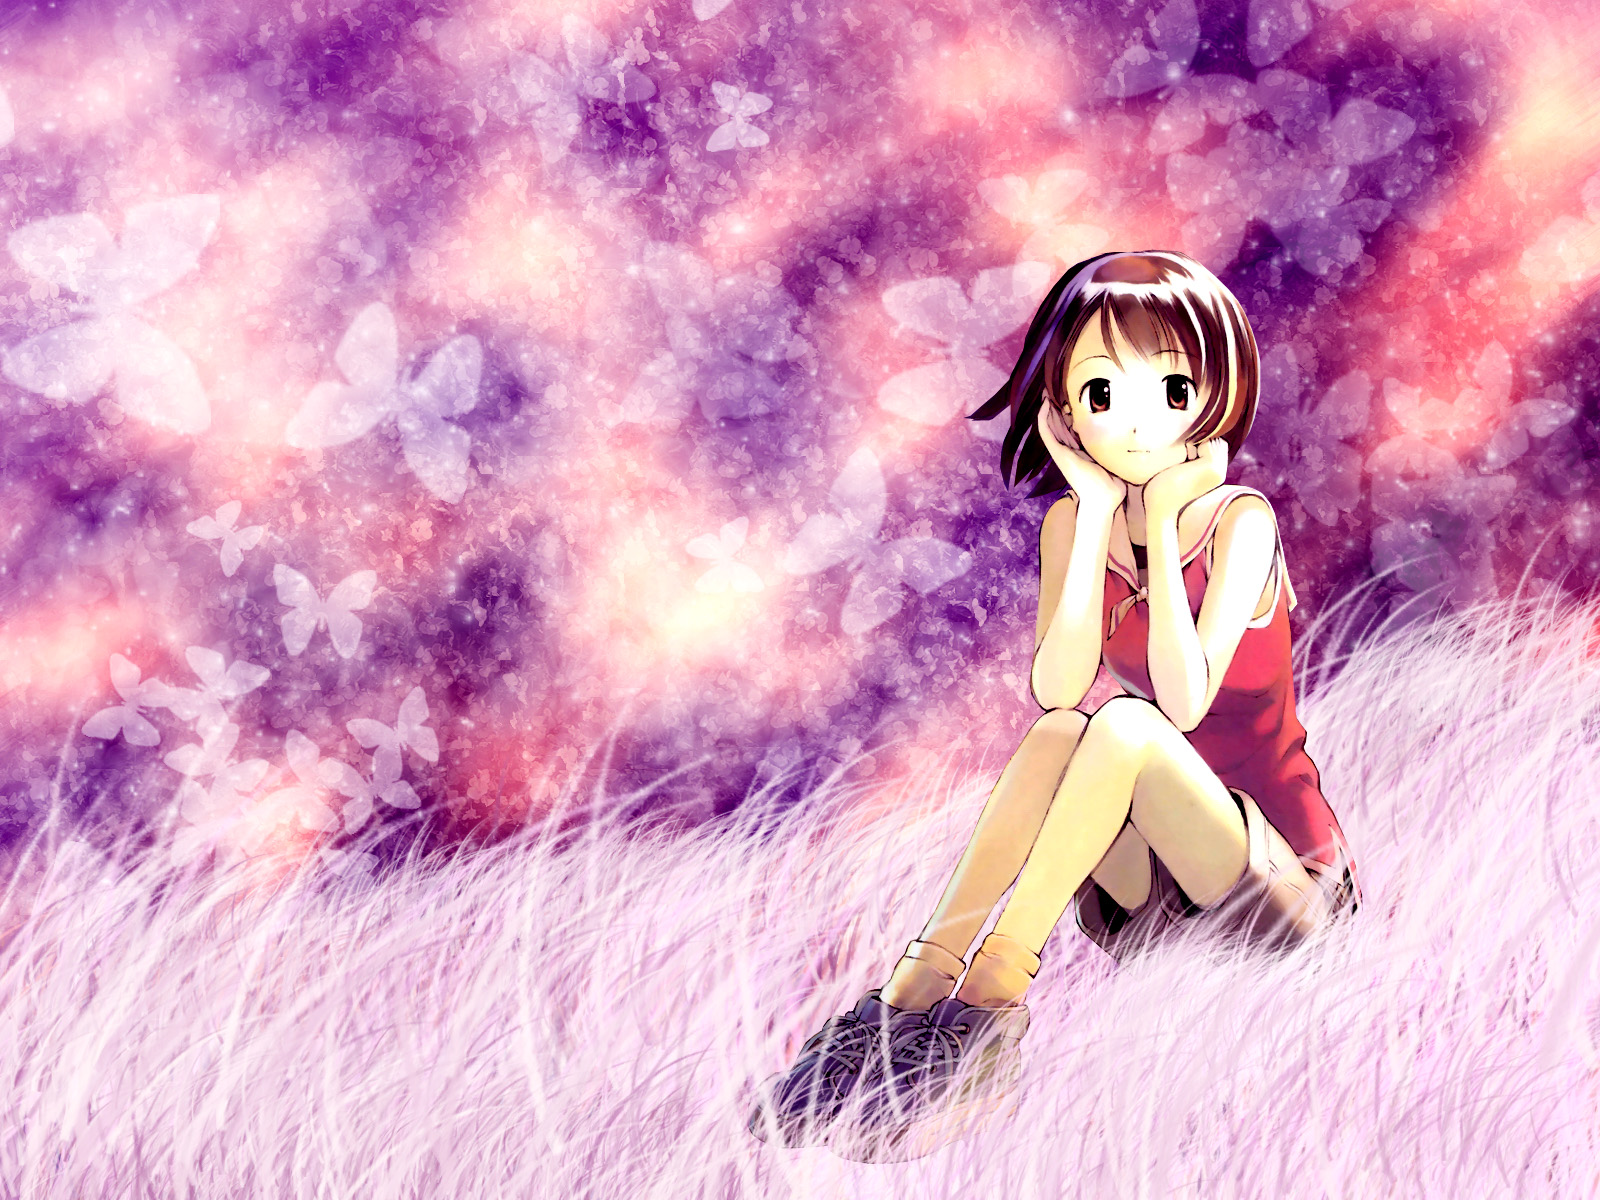 Cute Anime Girl Puter Desktop Wallpaper Pictures Image